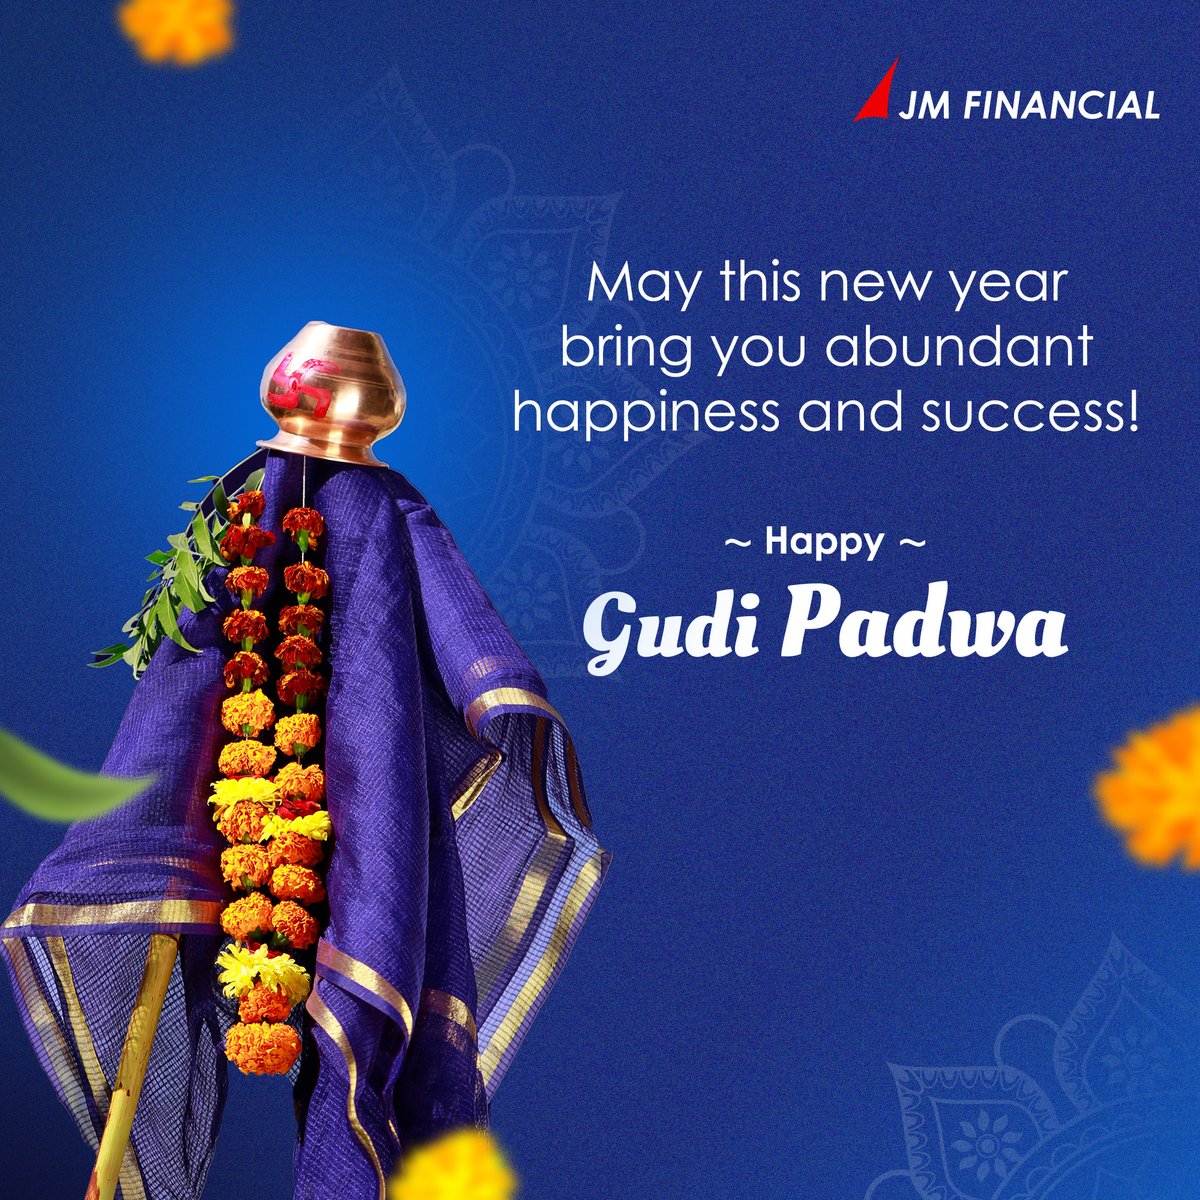 JM Financial wishes you Happy Gudi Padwa! May the new year bring you positivity and joy!

#JMFinancial #GudiPadwa #NewYear #Joy #Celebration #IndianFestival #Prosperity #Tradition #Culture